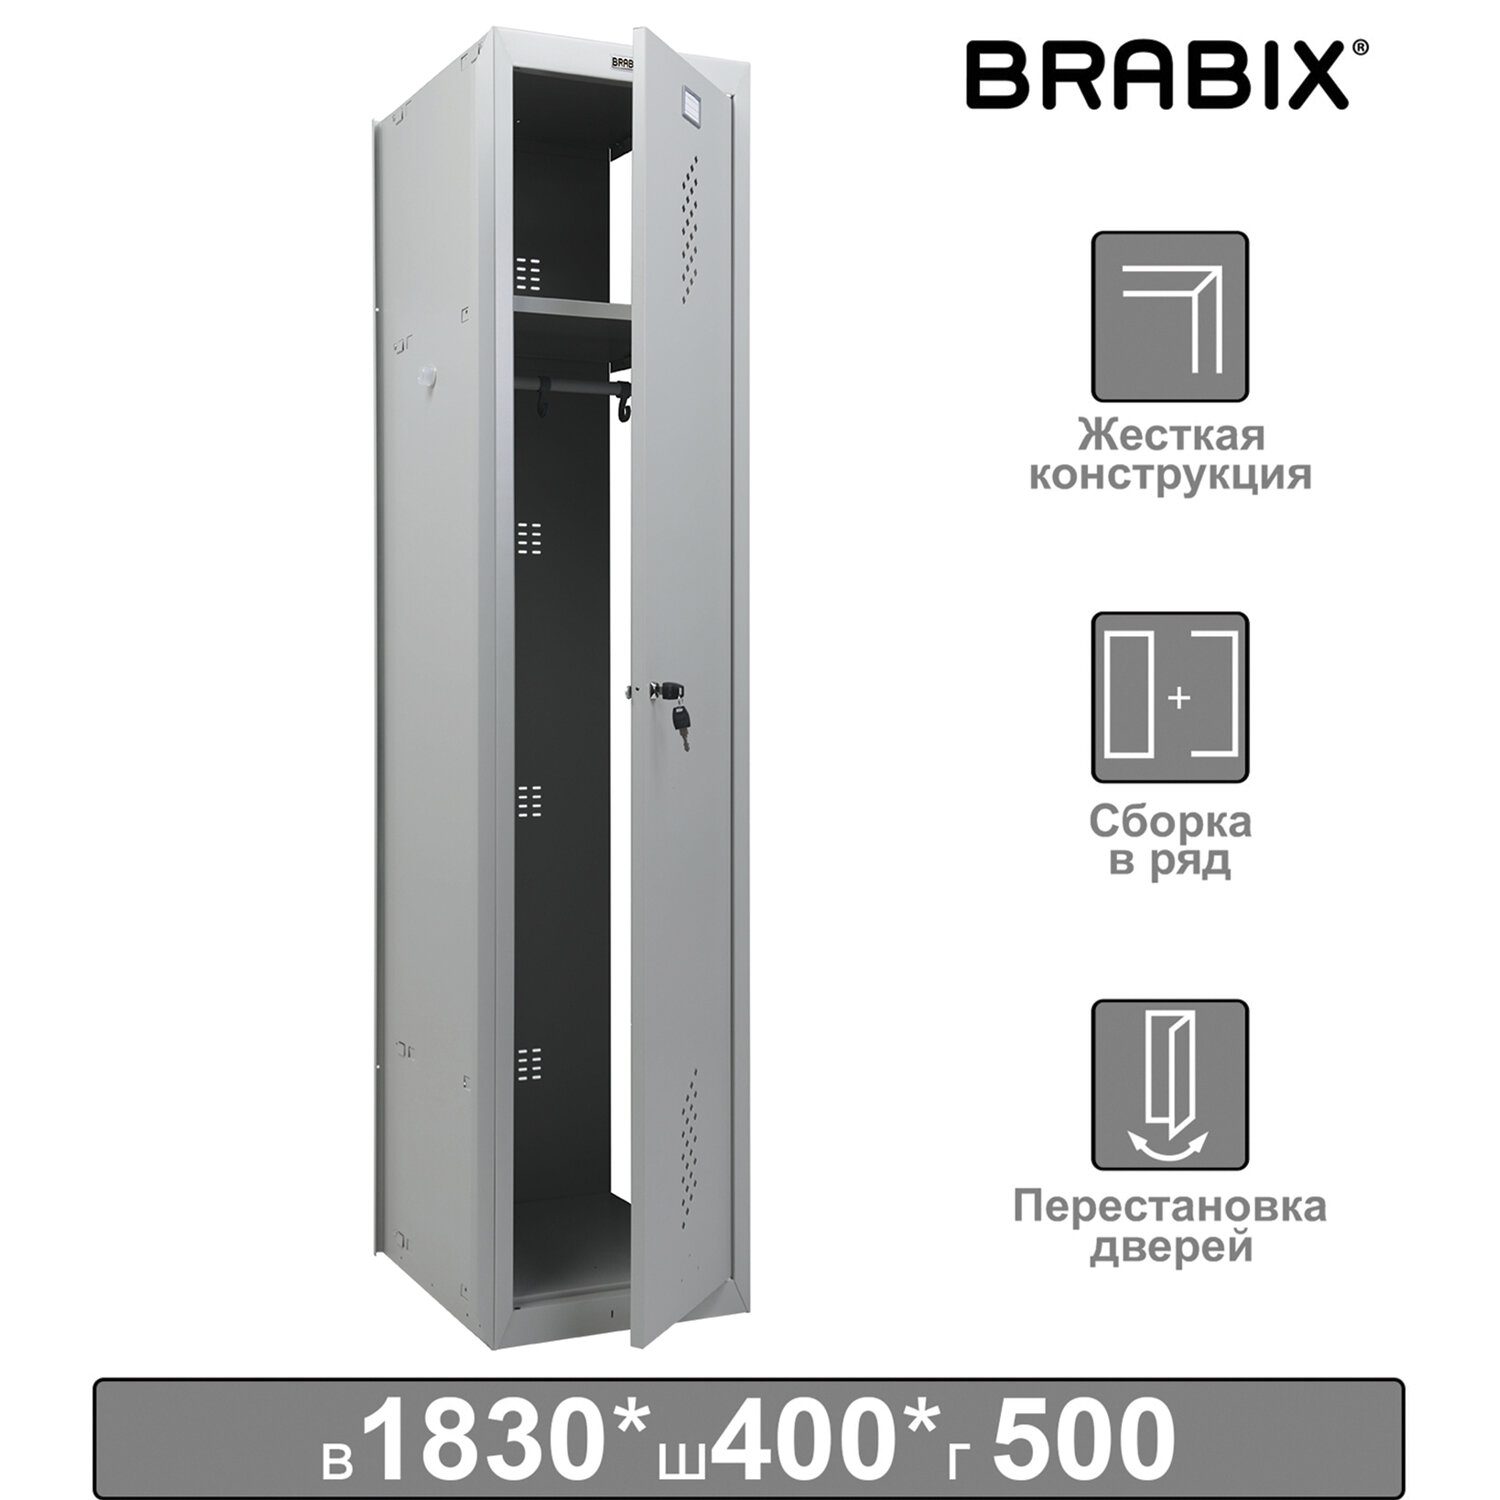 Brabix Шкаф (секция без стенки) металлический для одежды BRABIX LK 01-40, УСИЛЕННЫЙ, 1830х400х500 мм, 291131, S230BR403202